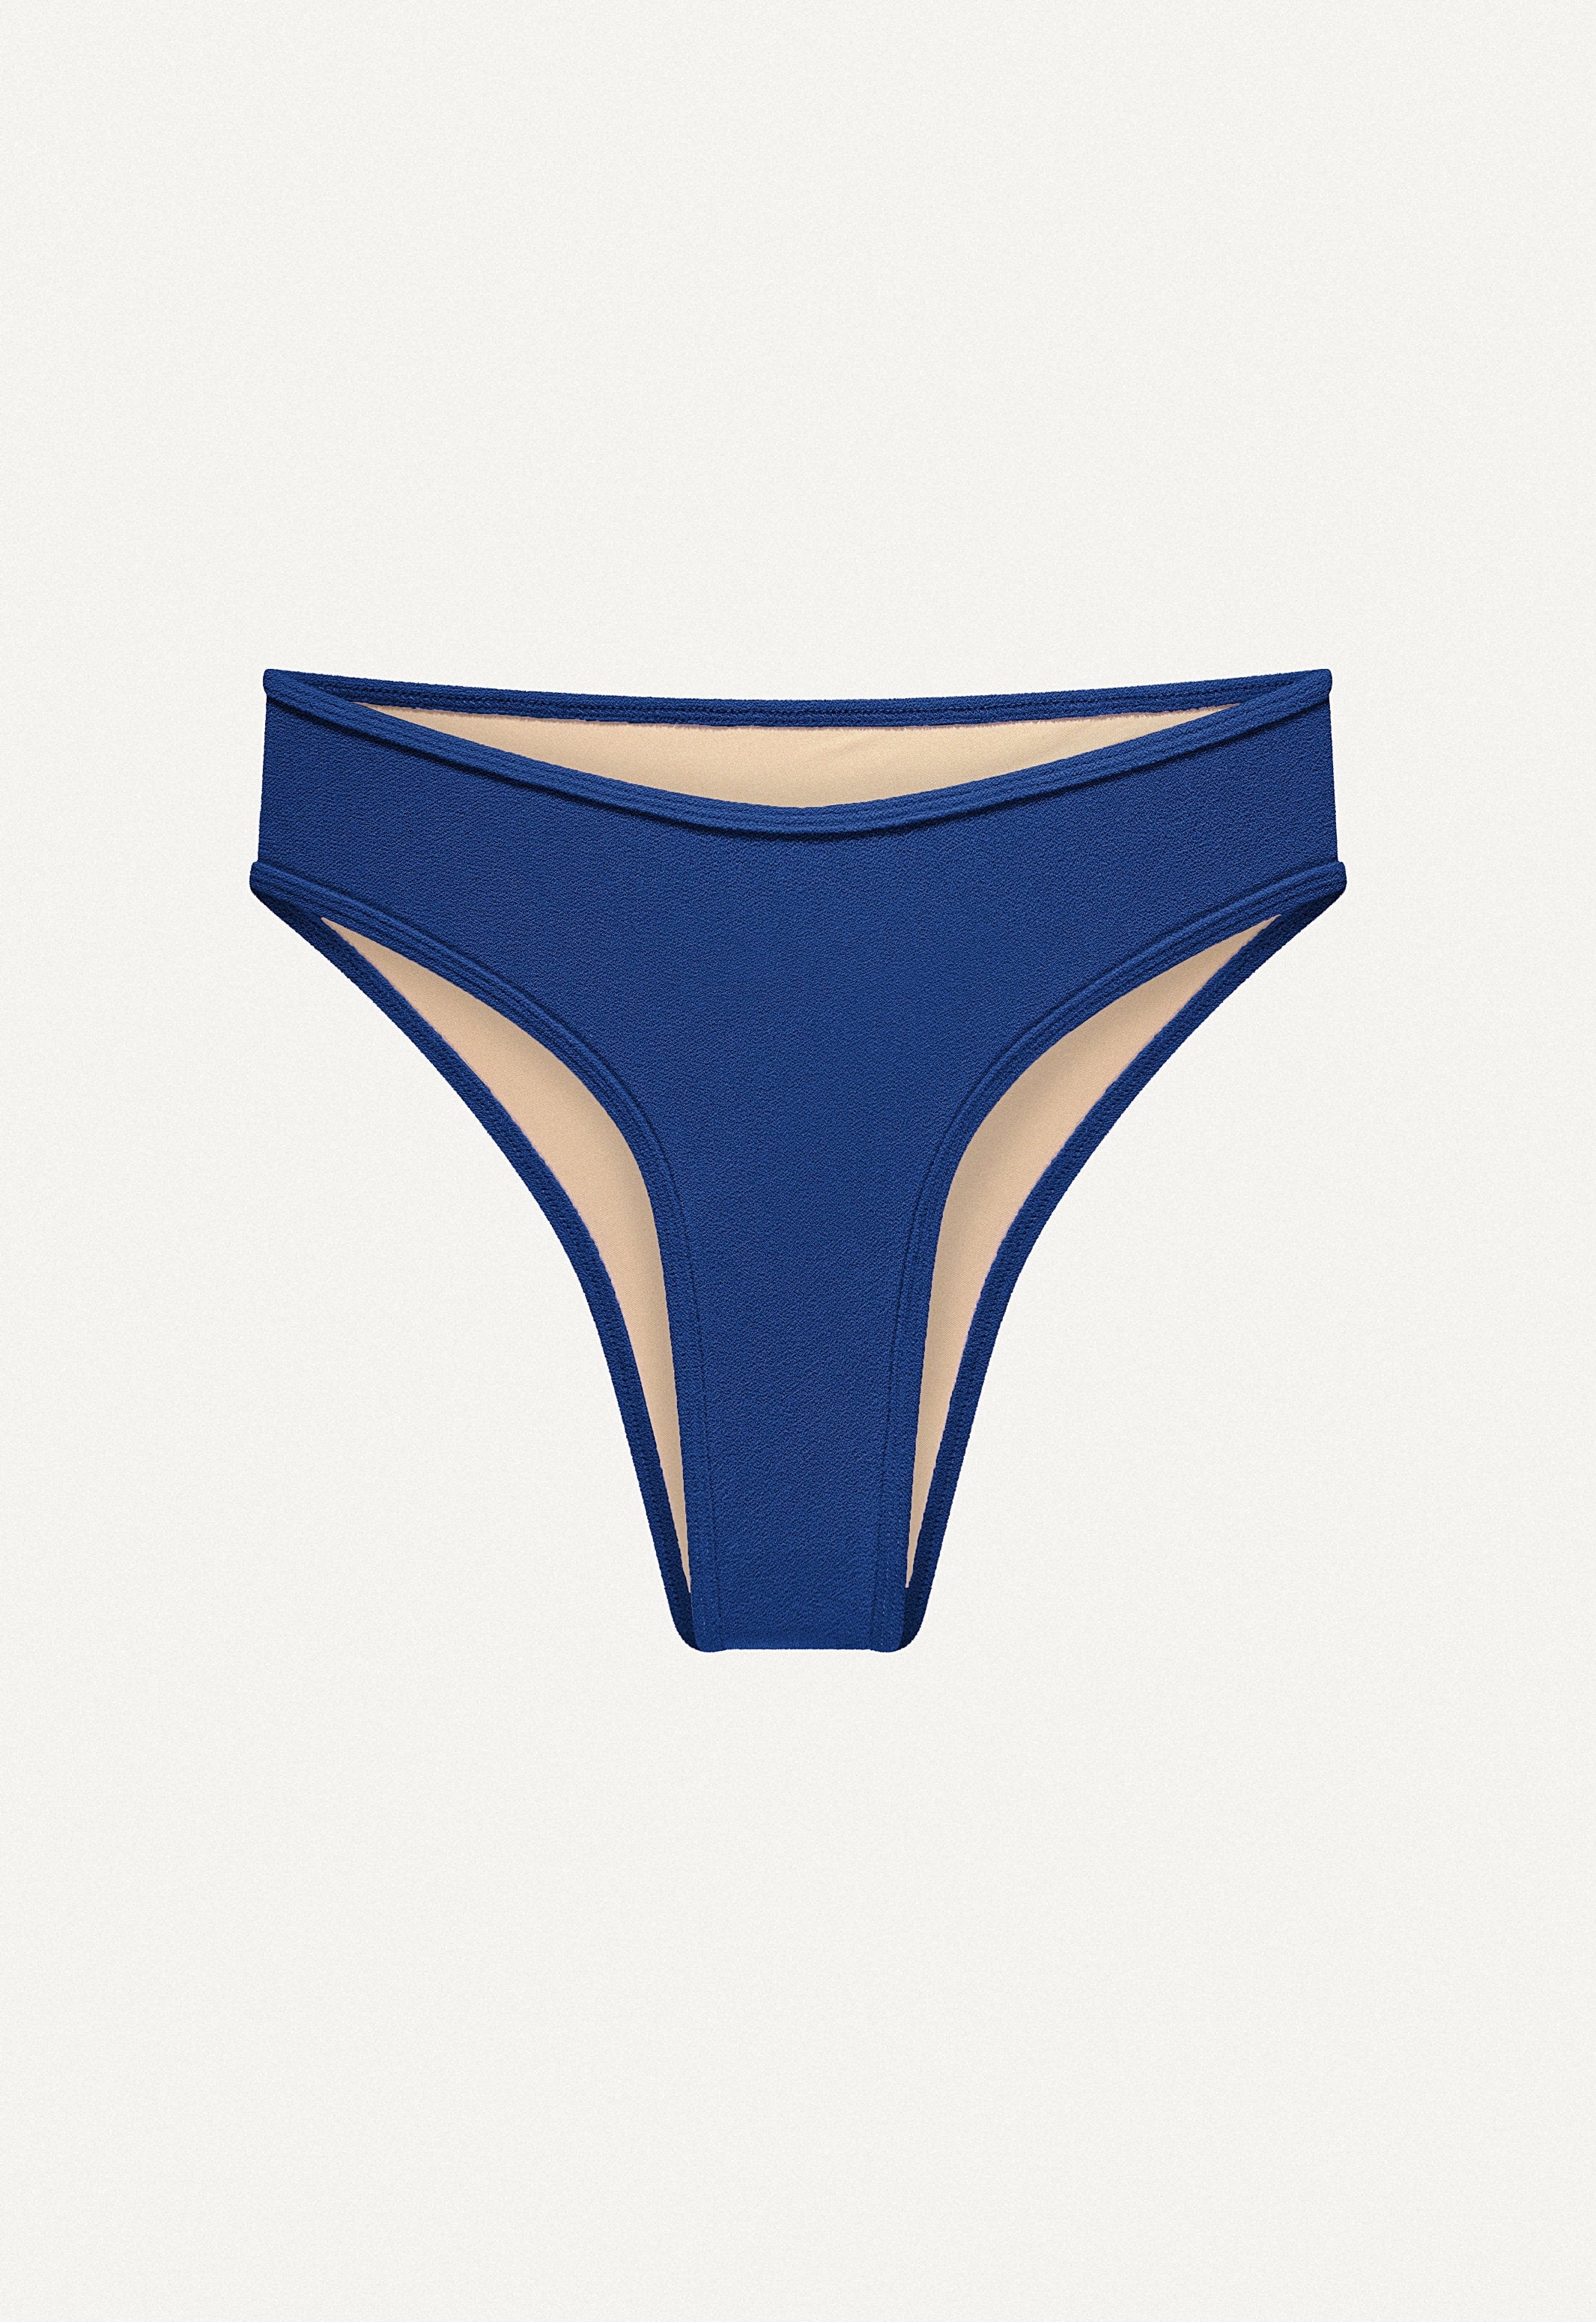 Bikini Bottom "Calima" in dark blue terry